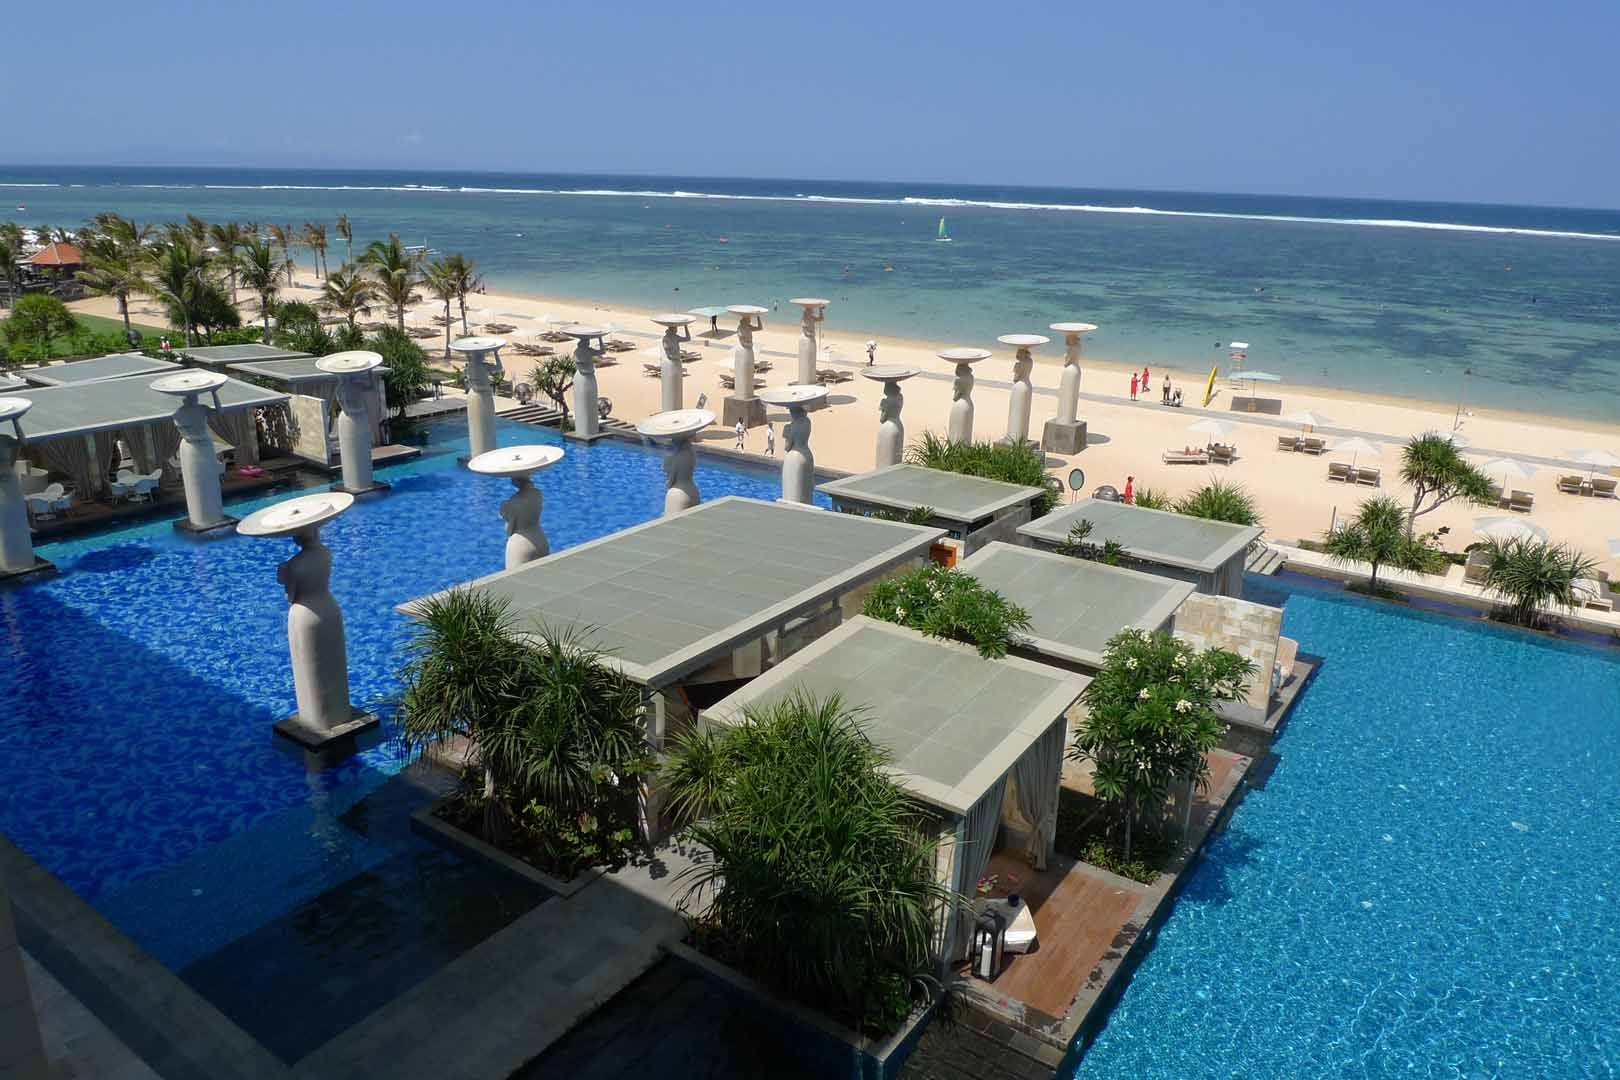 Bali_Hotels_Mulia_002